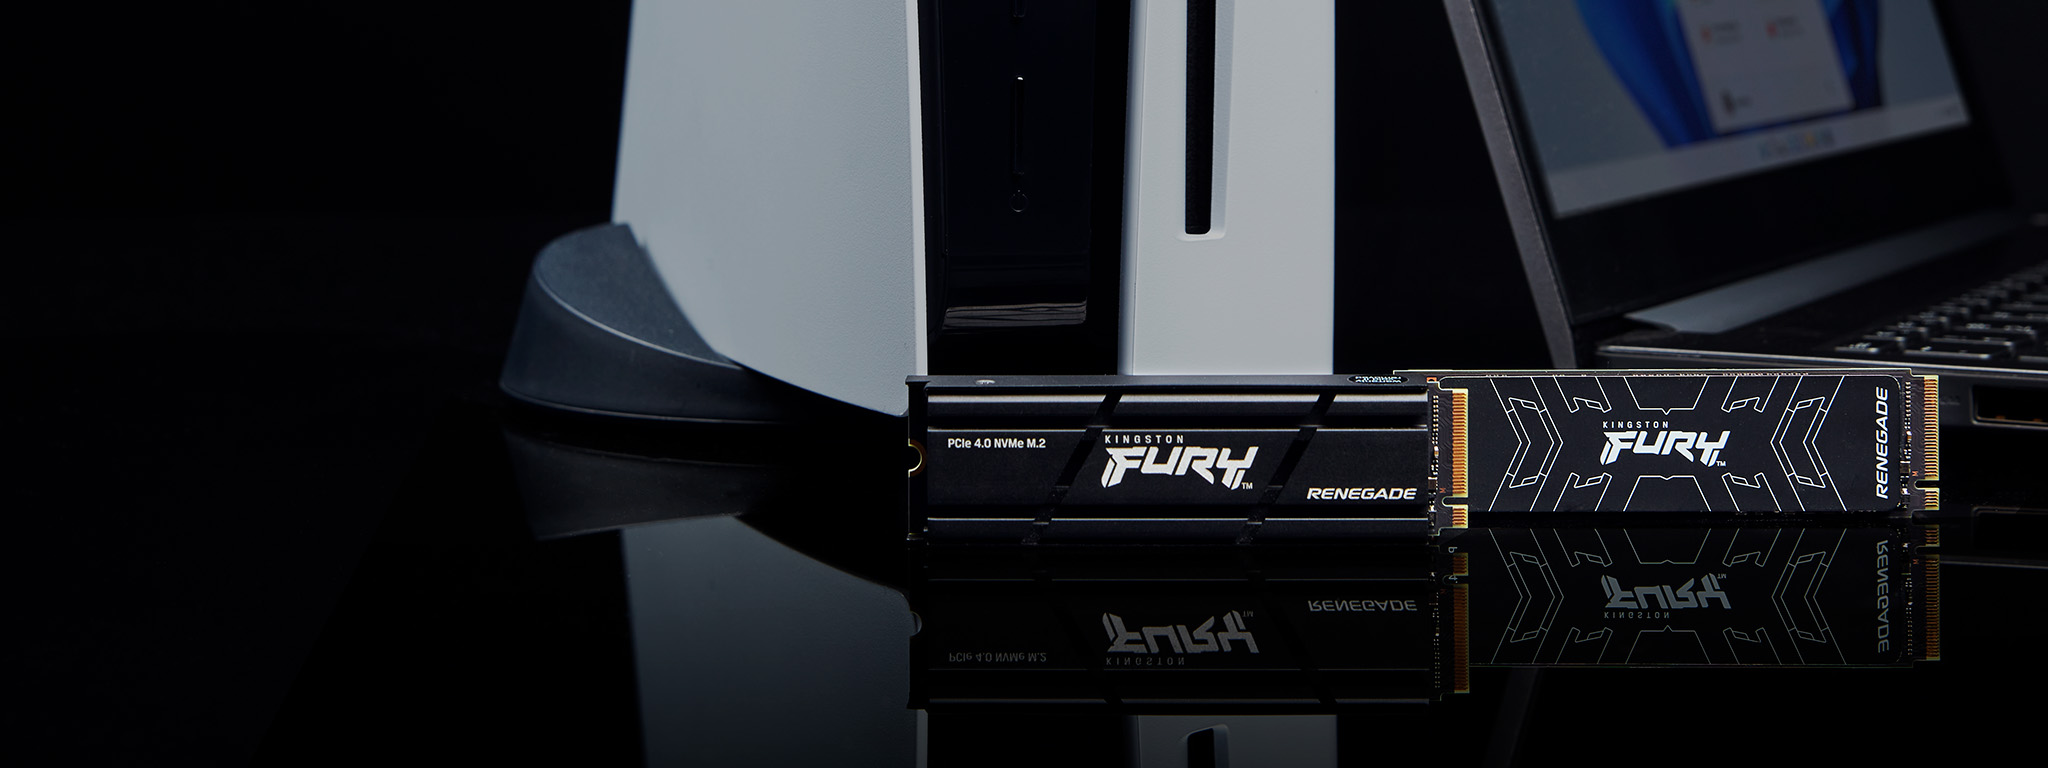 Два SSD-накопителя Kingston FURY Renegade с теплоотводом и без, рядом с PS5 и ноутбуком.